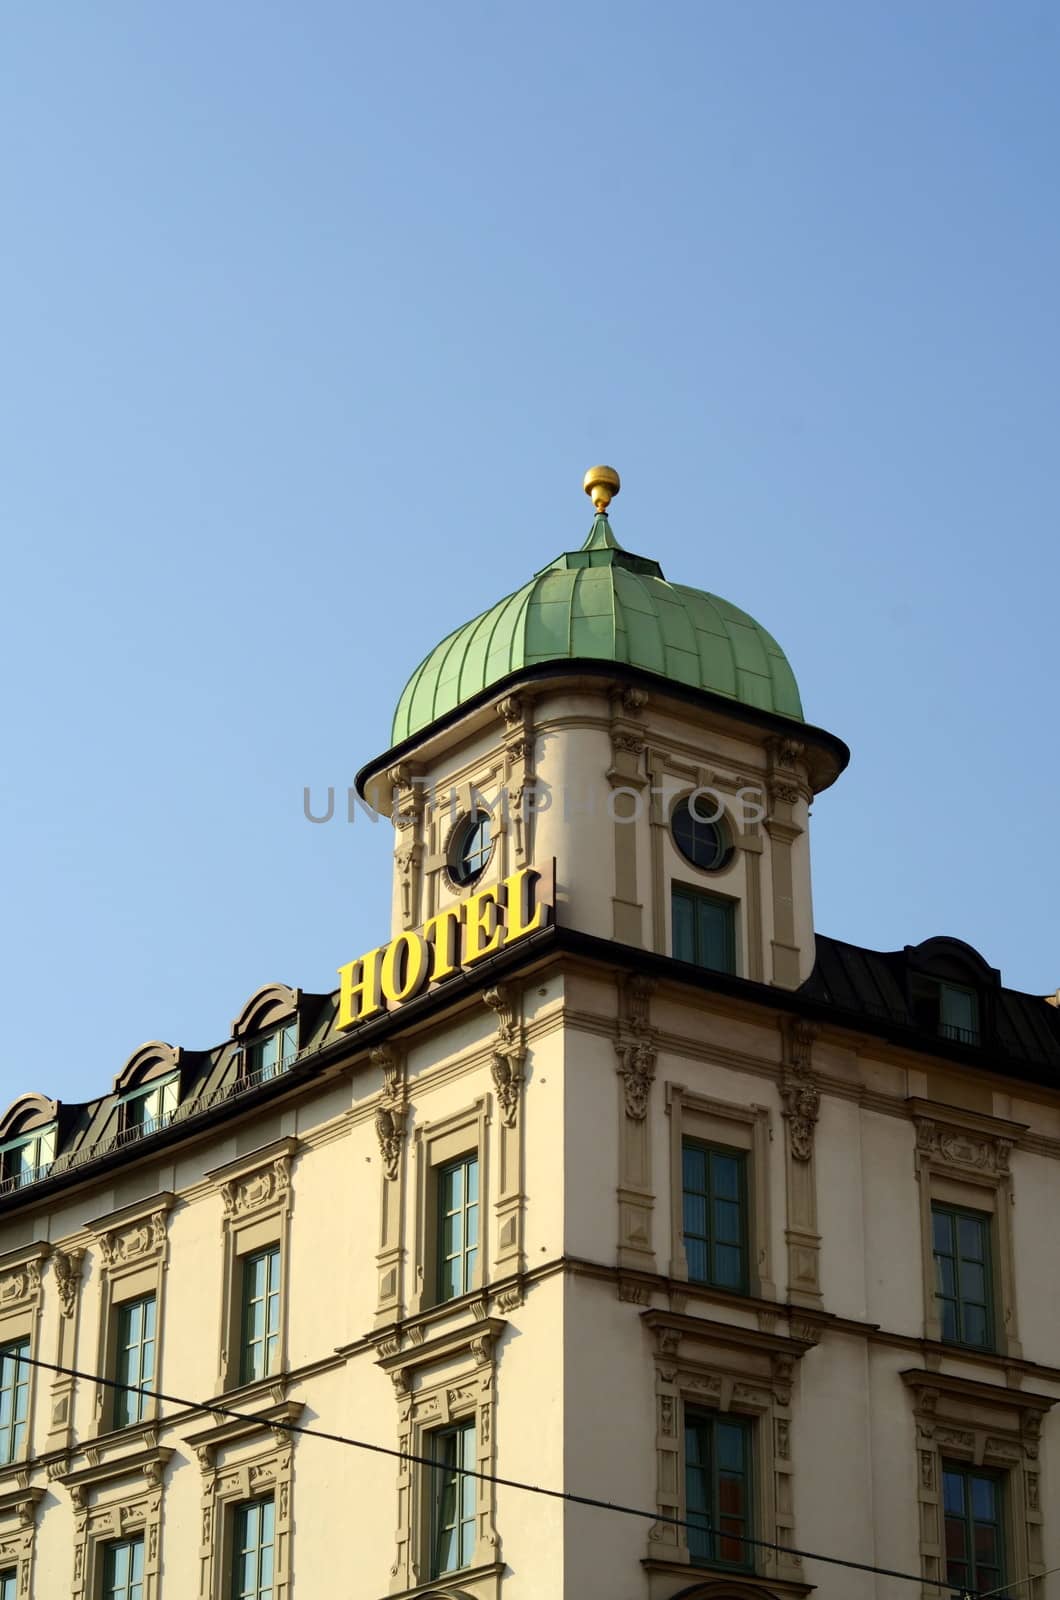 Grand Hotel by mrdoomits